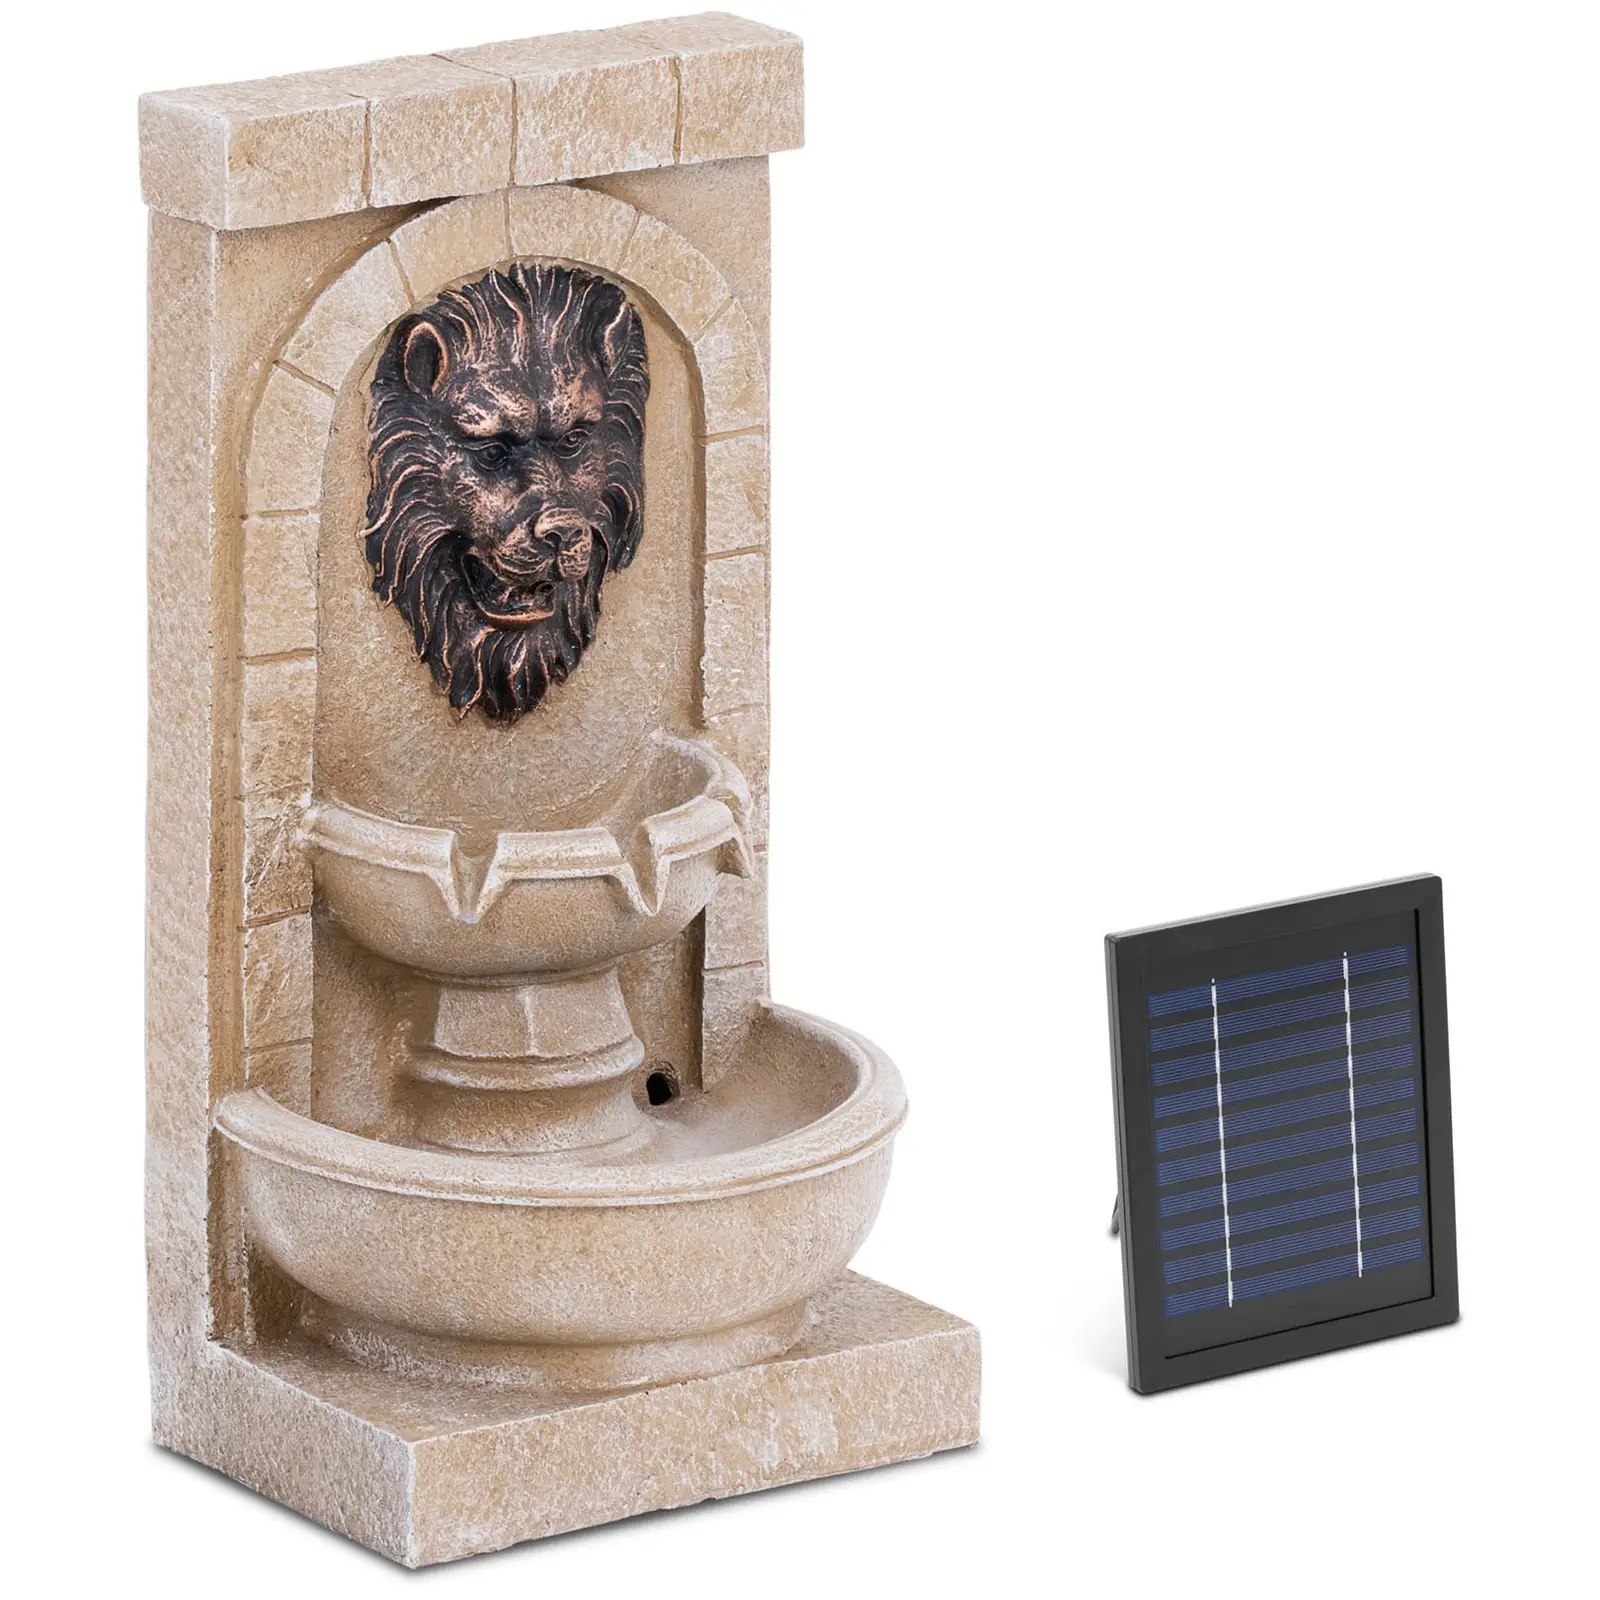 Fuente de jardín solar - 2 niveles con surtidor de cabeza de león - iluminación LED